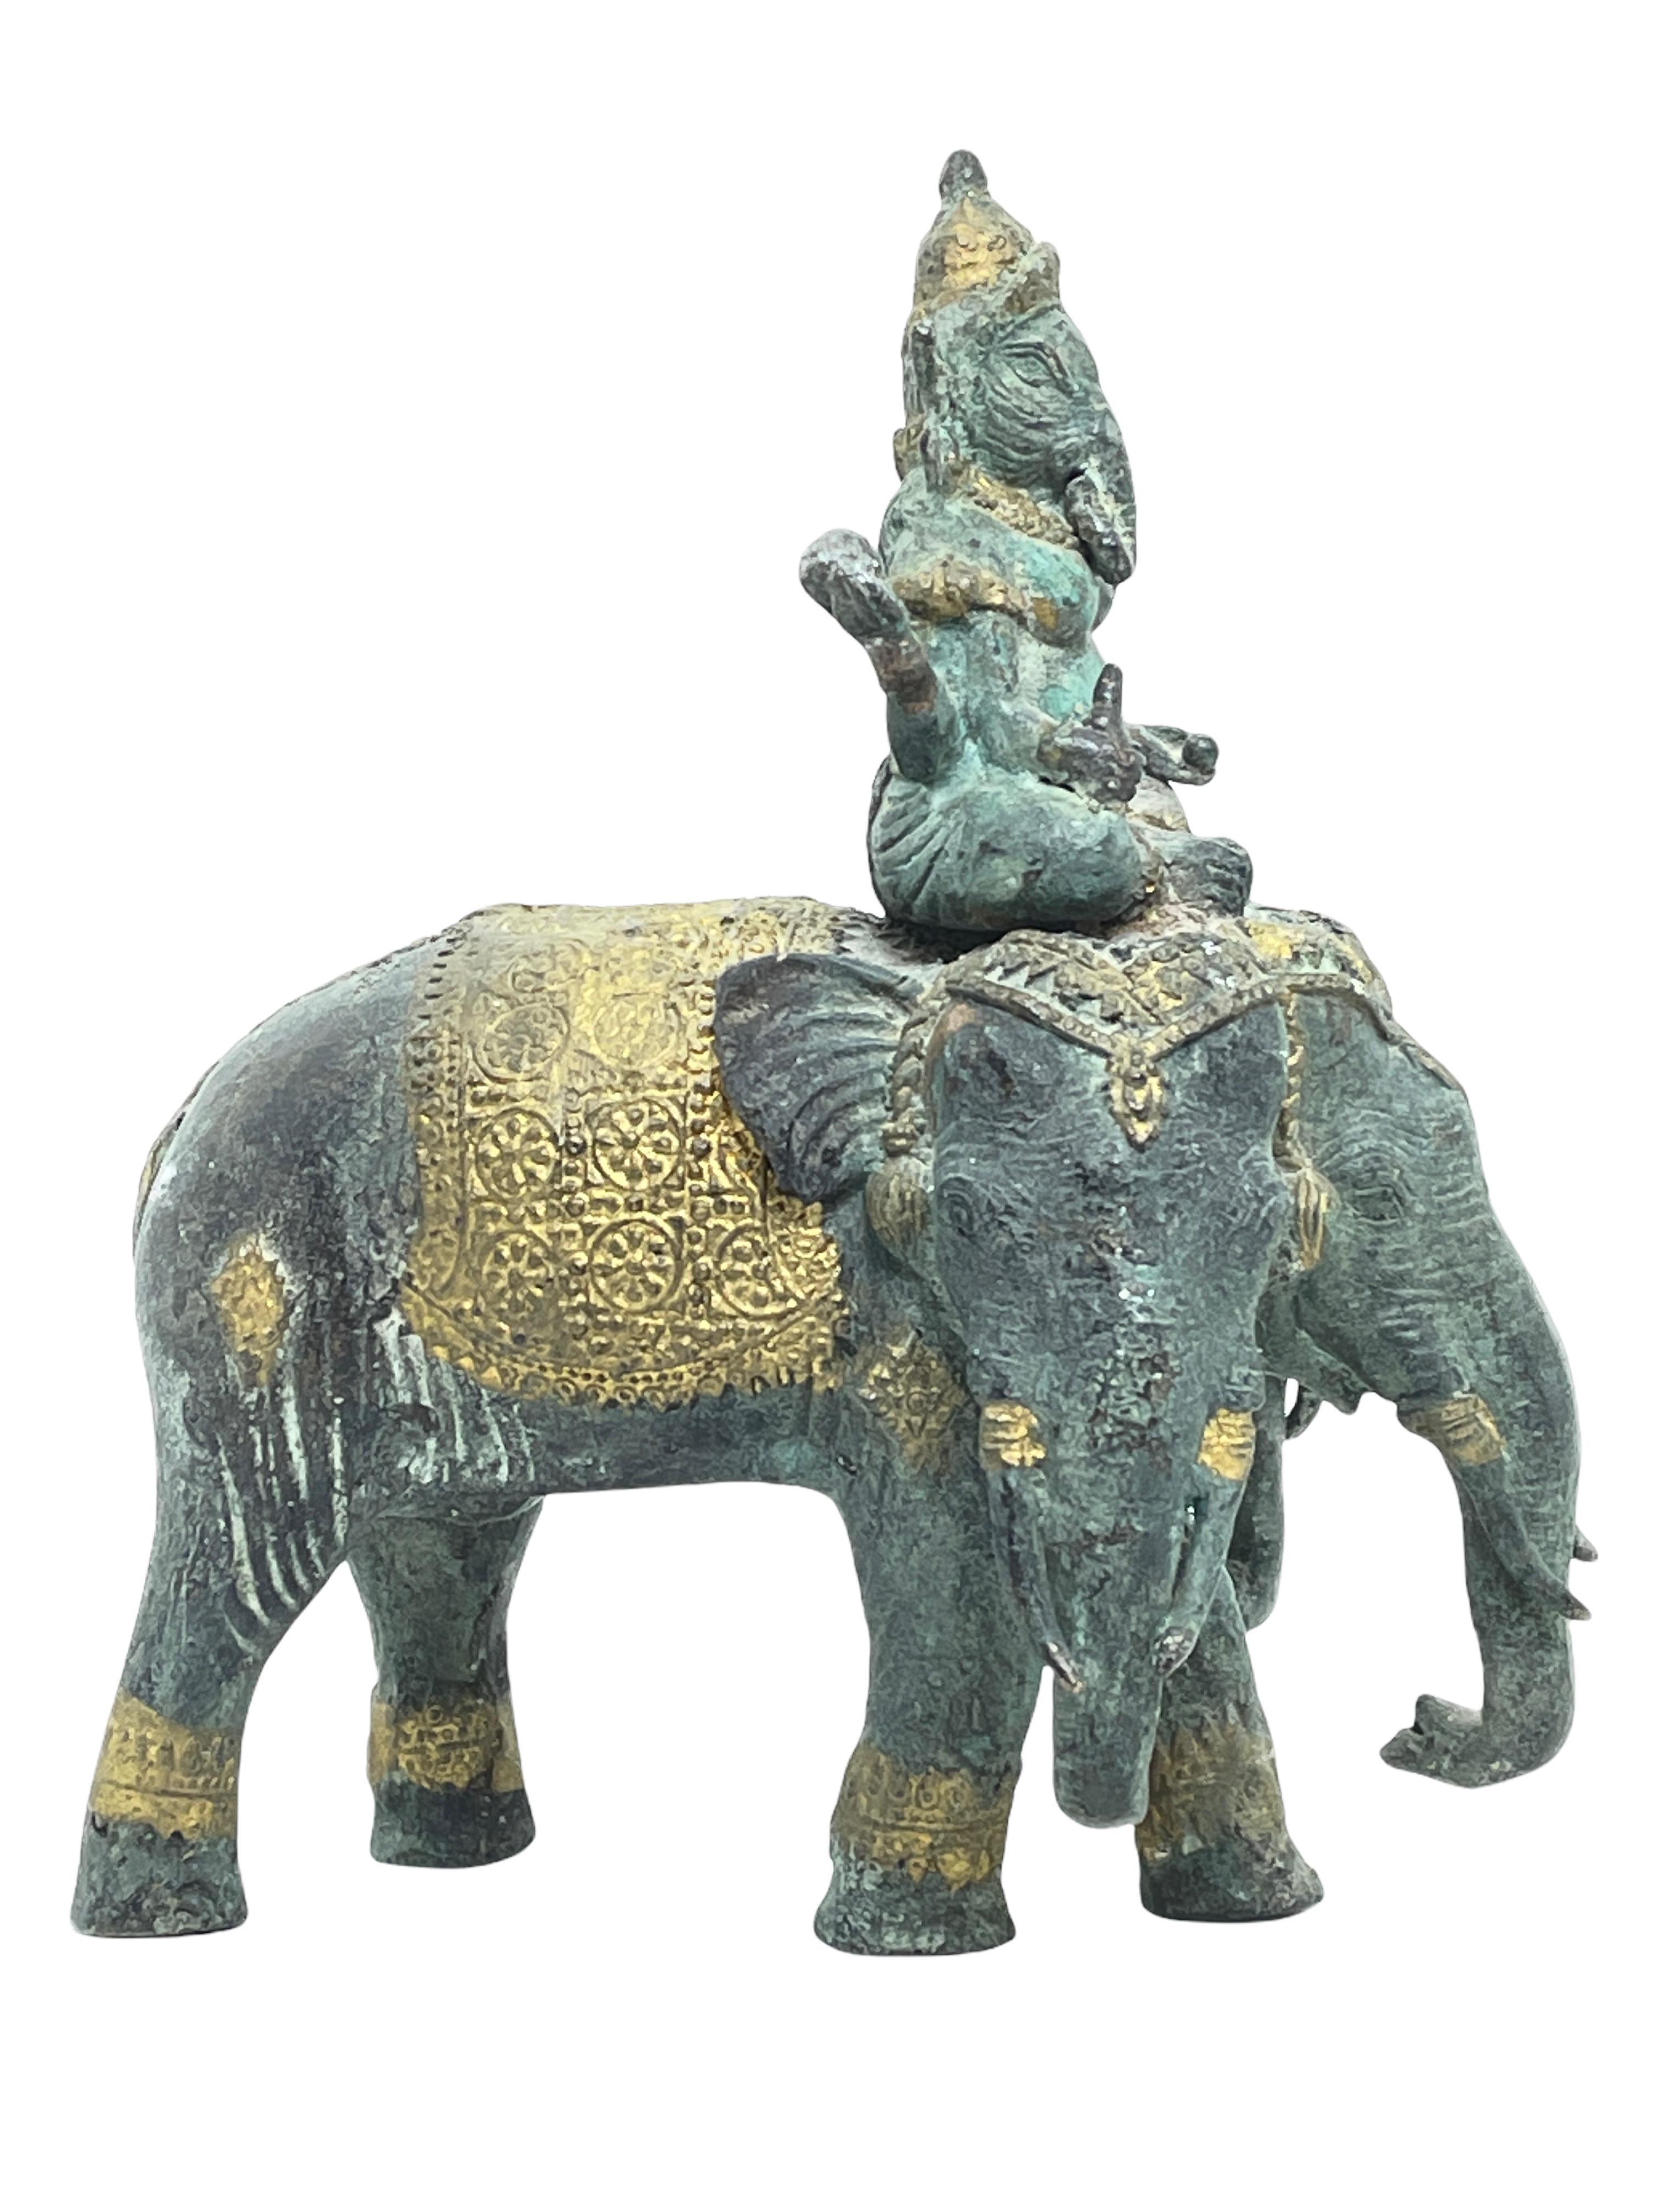 Indian Ganesha Ridding Elephant Sculpture Statue Vintage 1950s, India